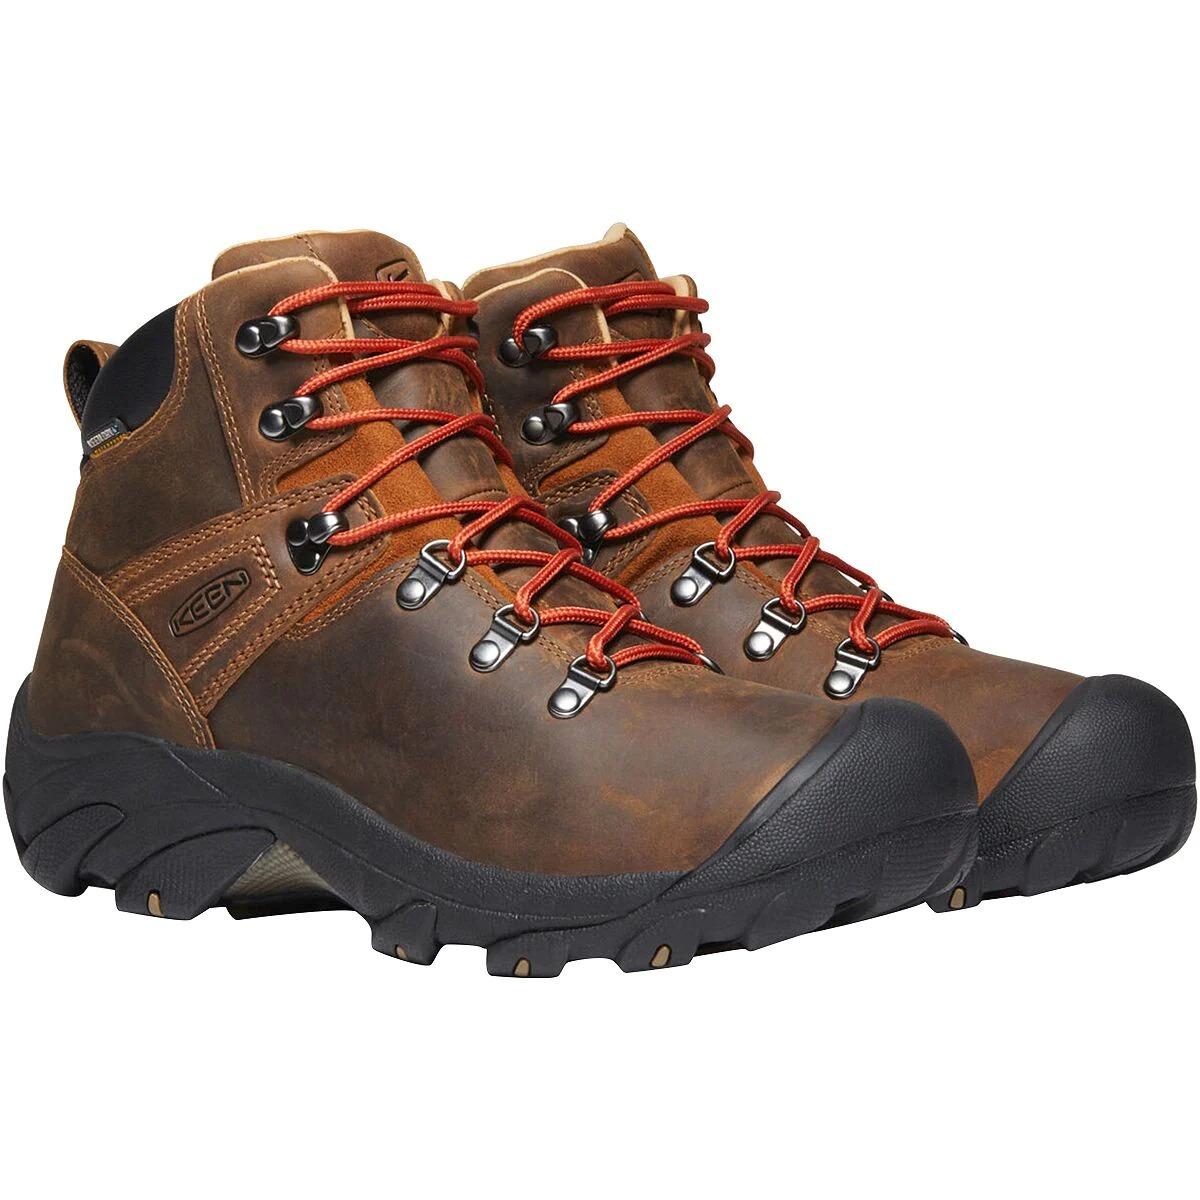 Keen Pyrenees Hiking Boots - Men's | SkiCountrySports.com